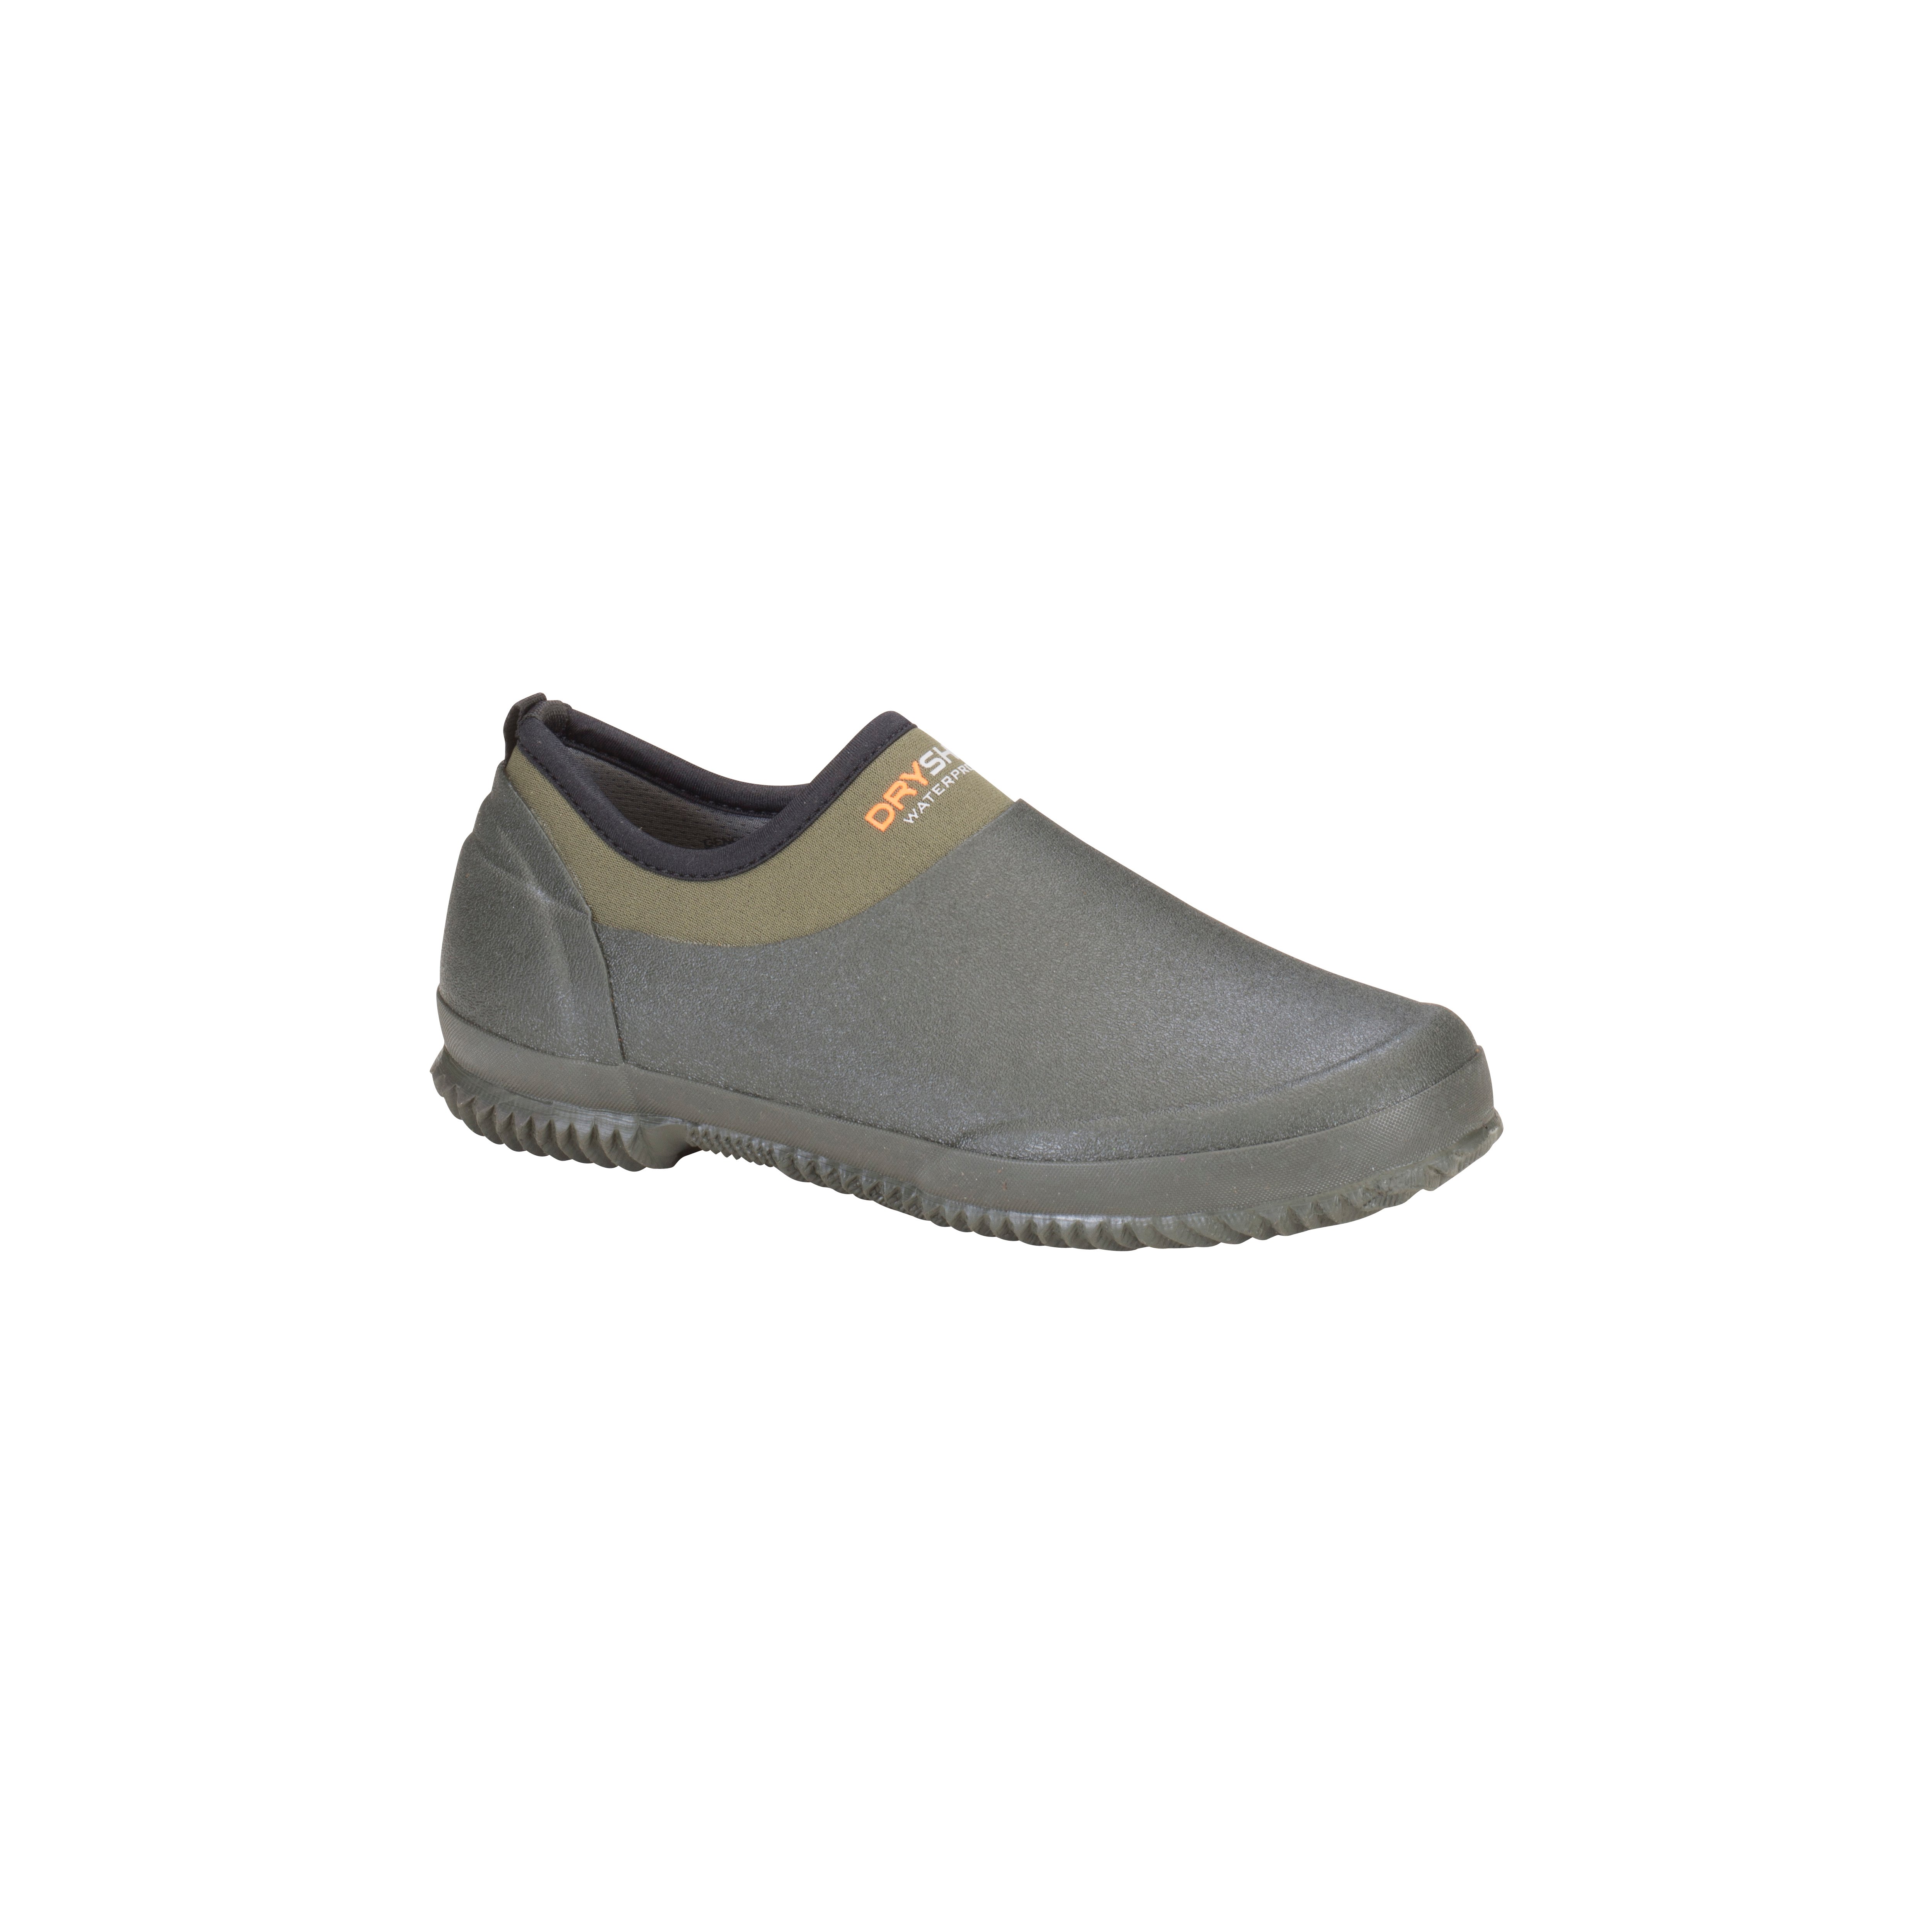 Sod Buster Shoe Moss – Dryshod Waterproof Boots